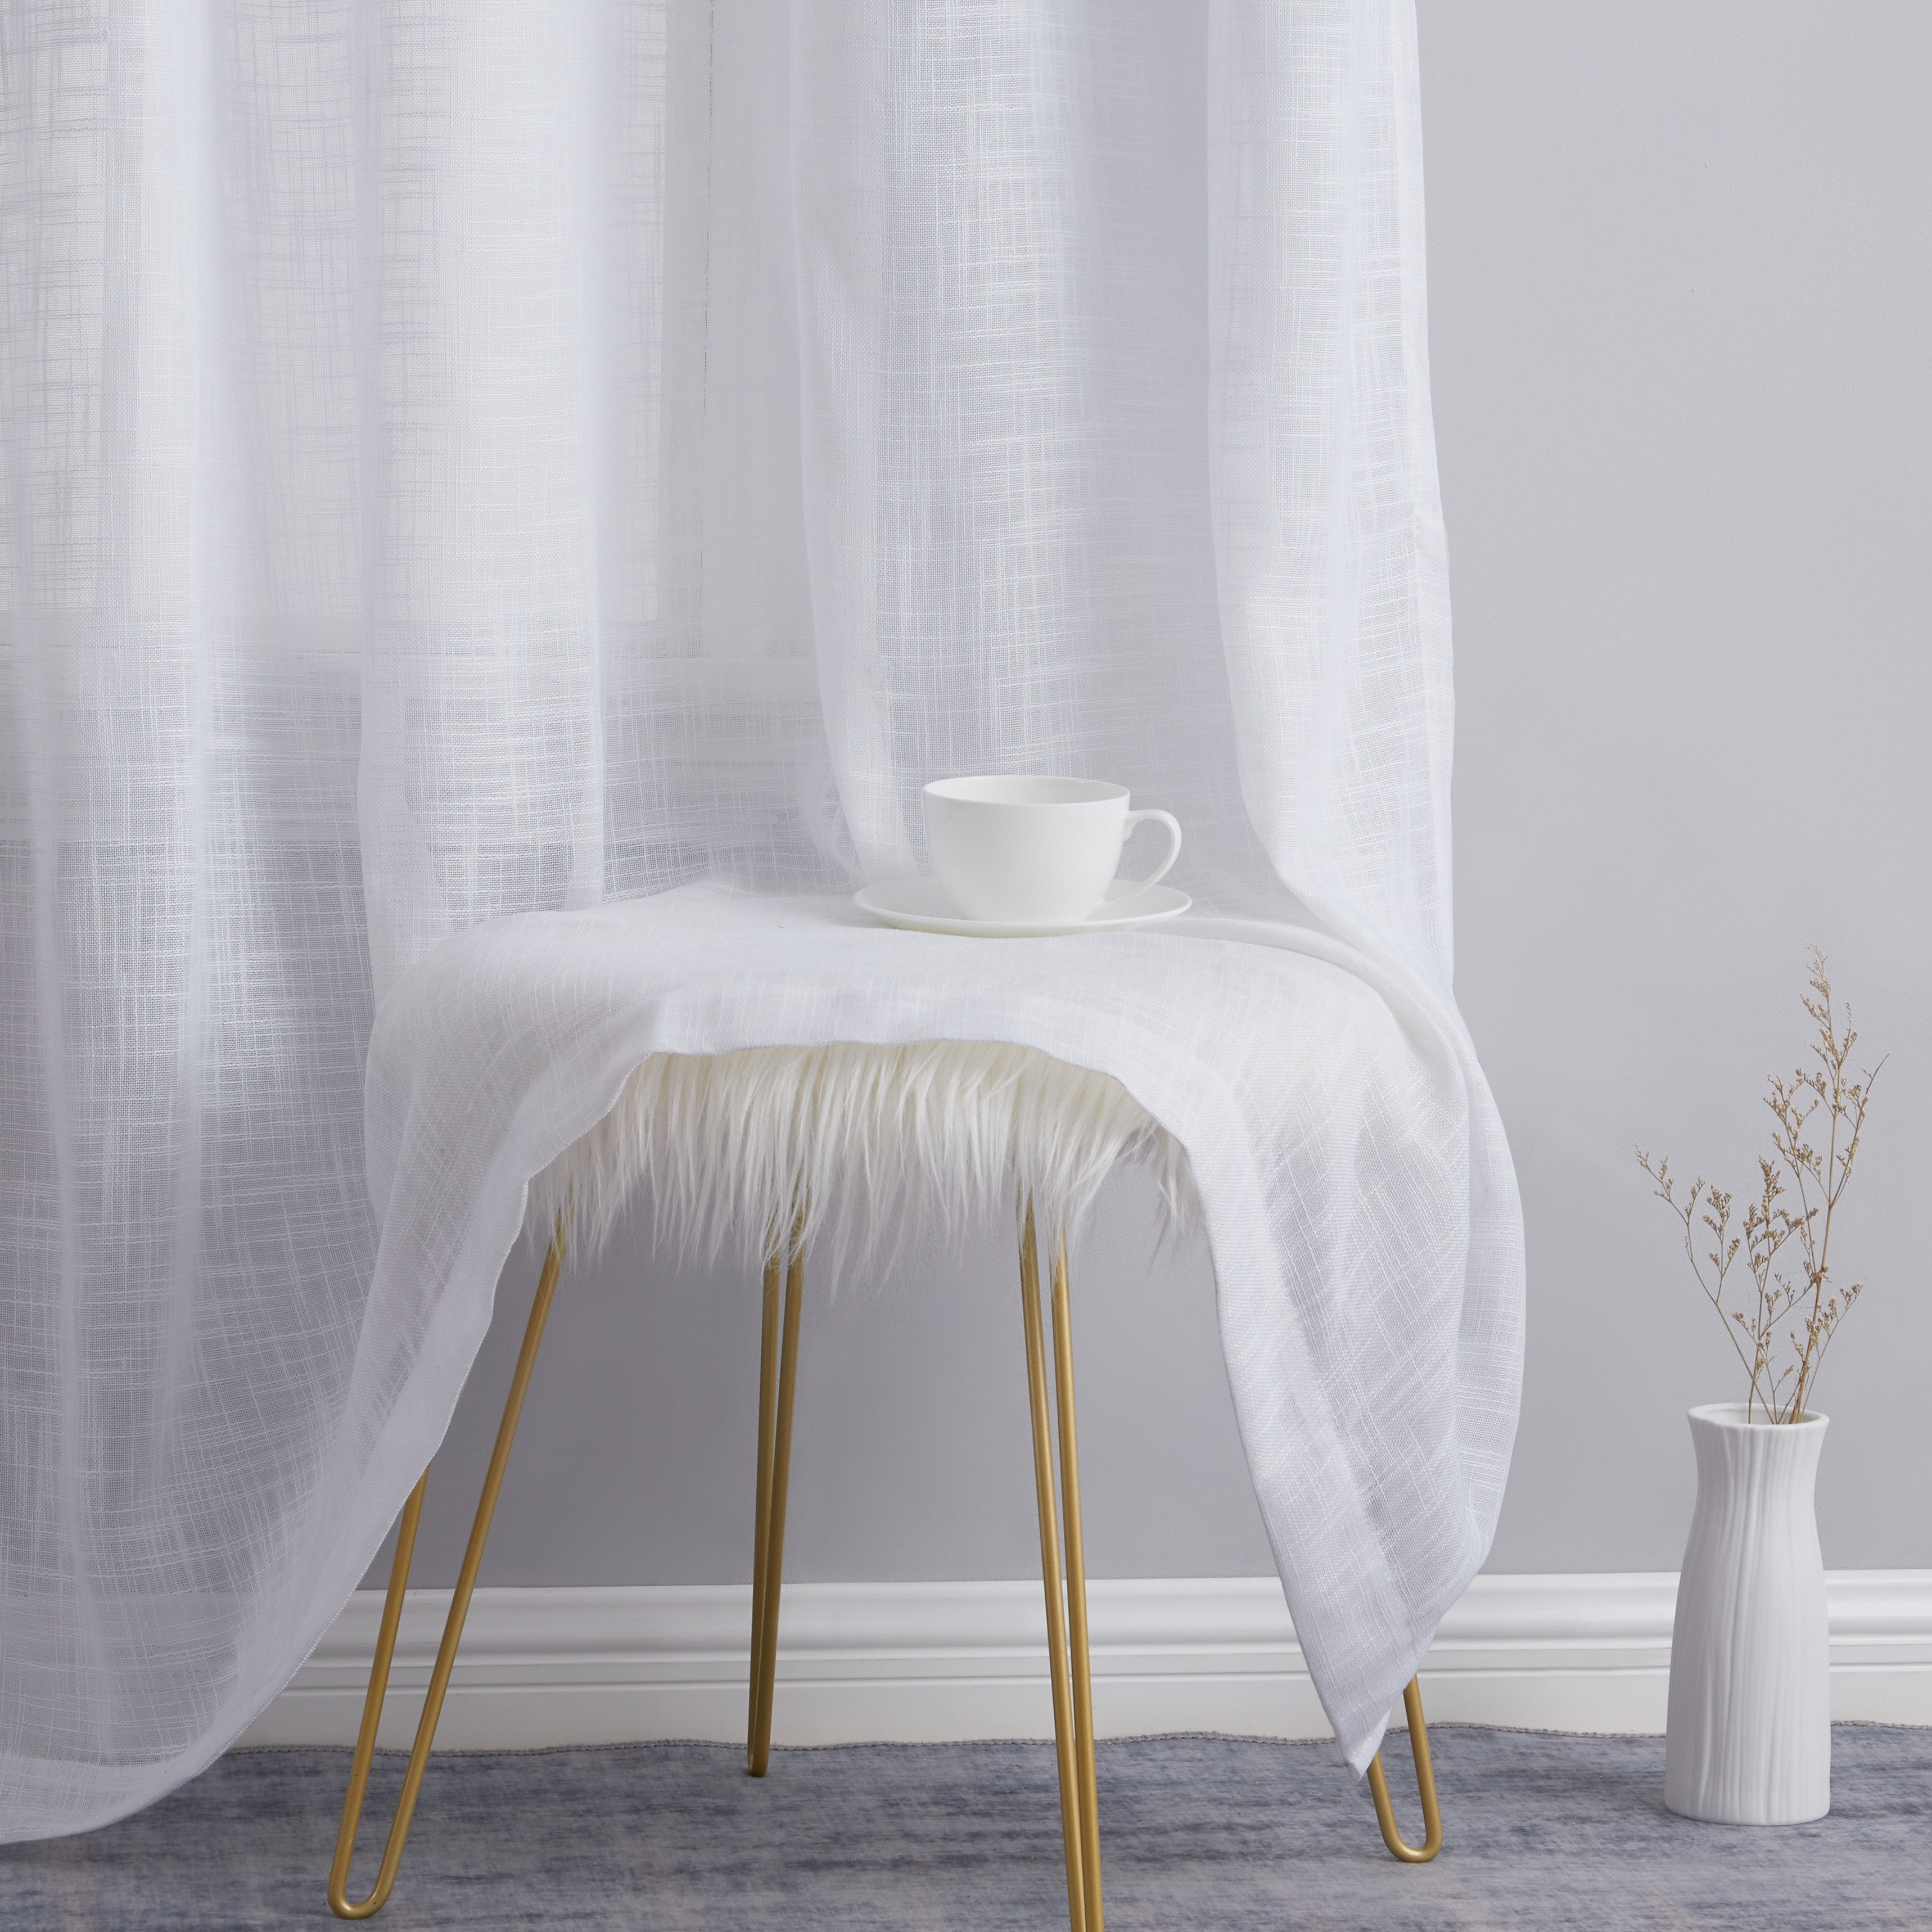 Madison Faux Linen Sheer Grommet Curtain Panels